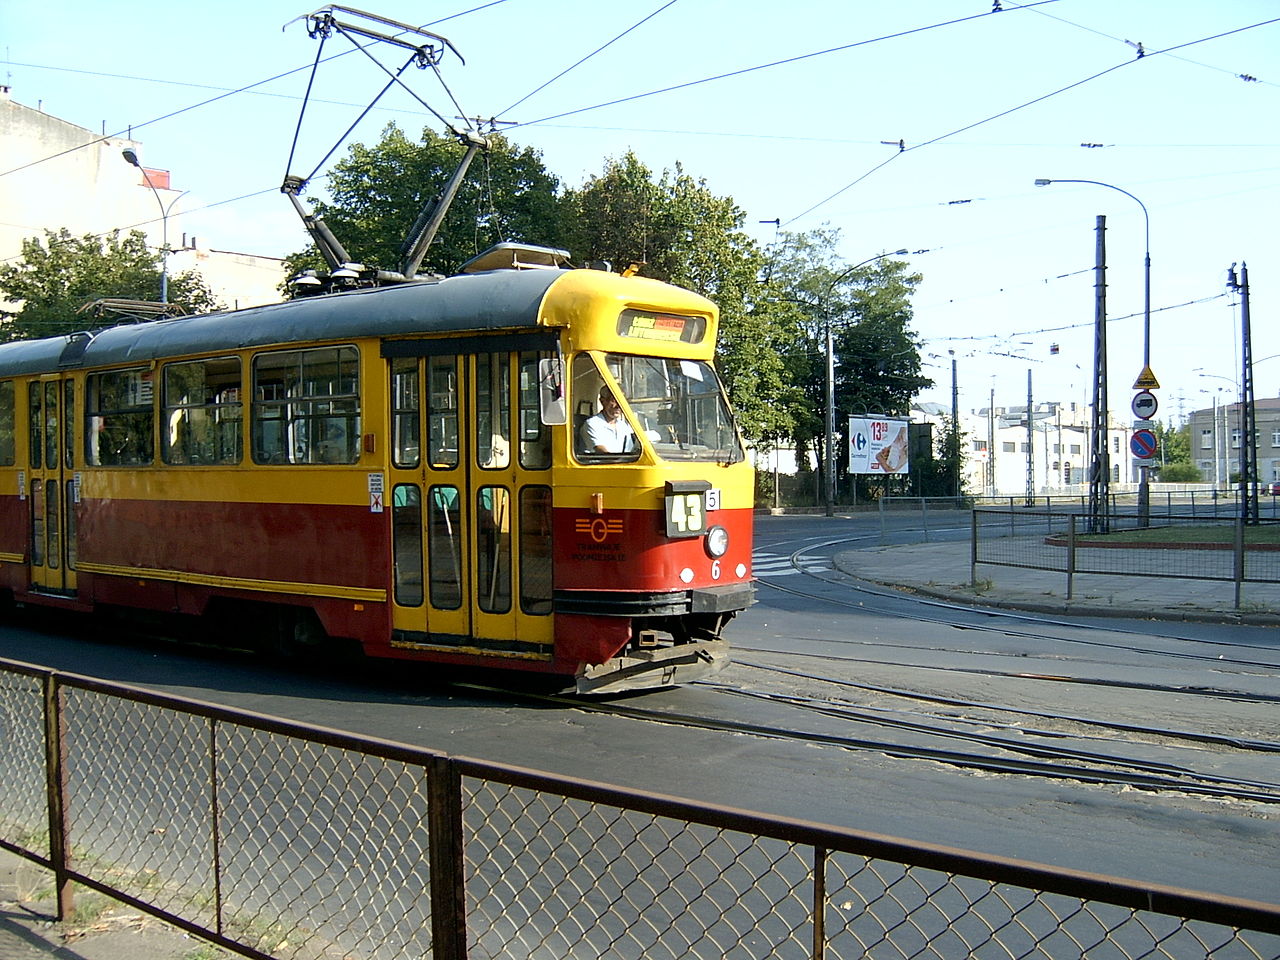 Lodz tram